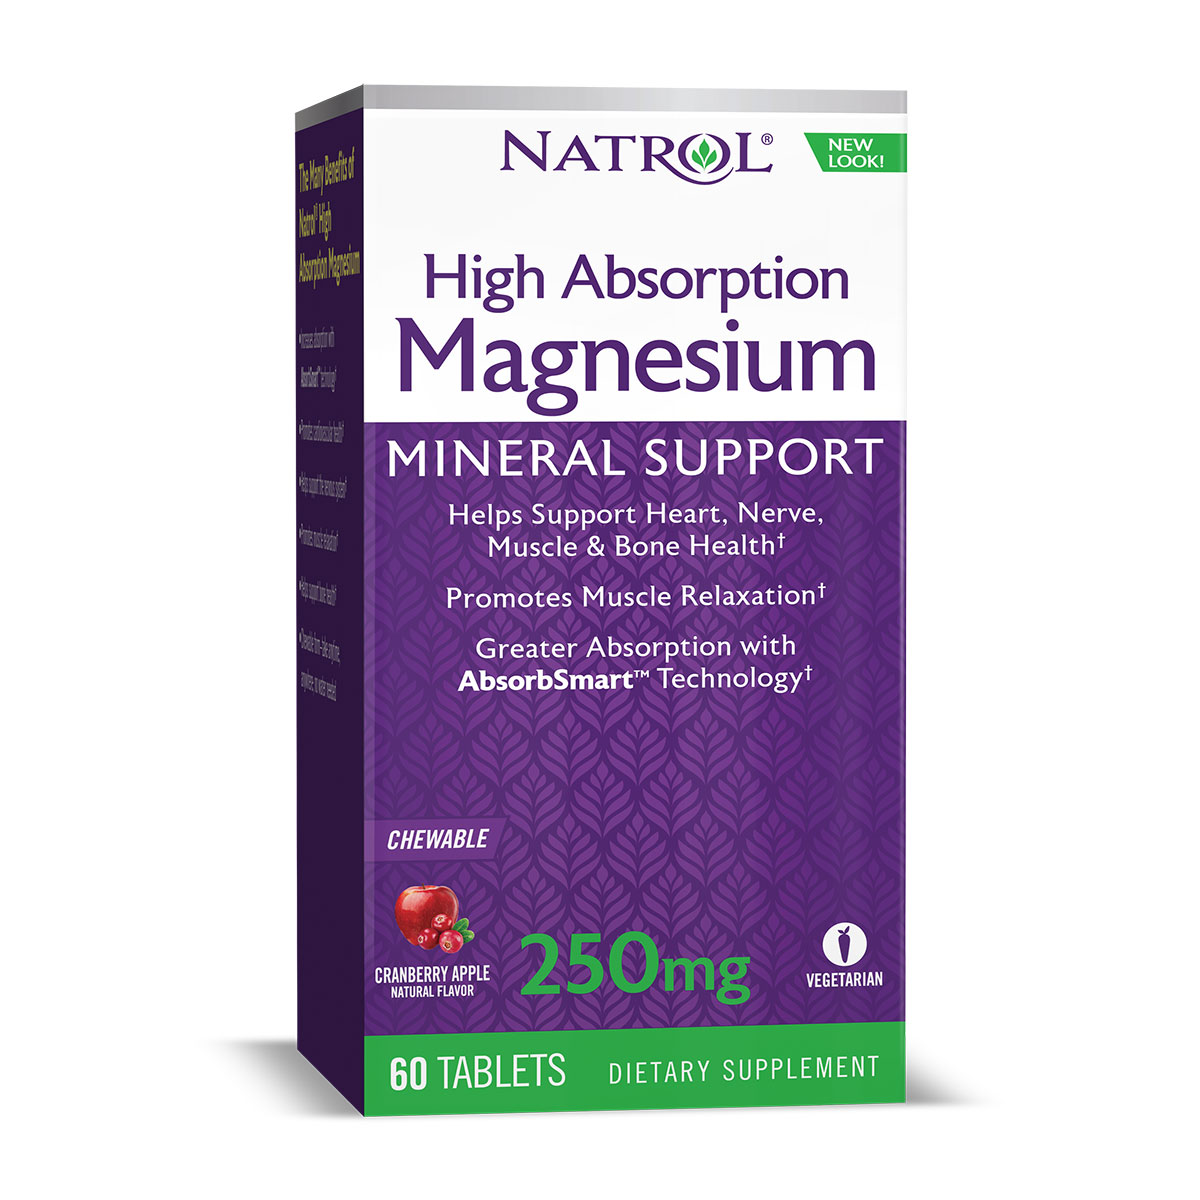 Magnesium High Absorption